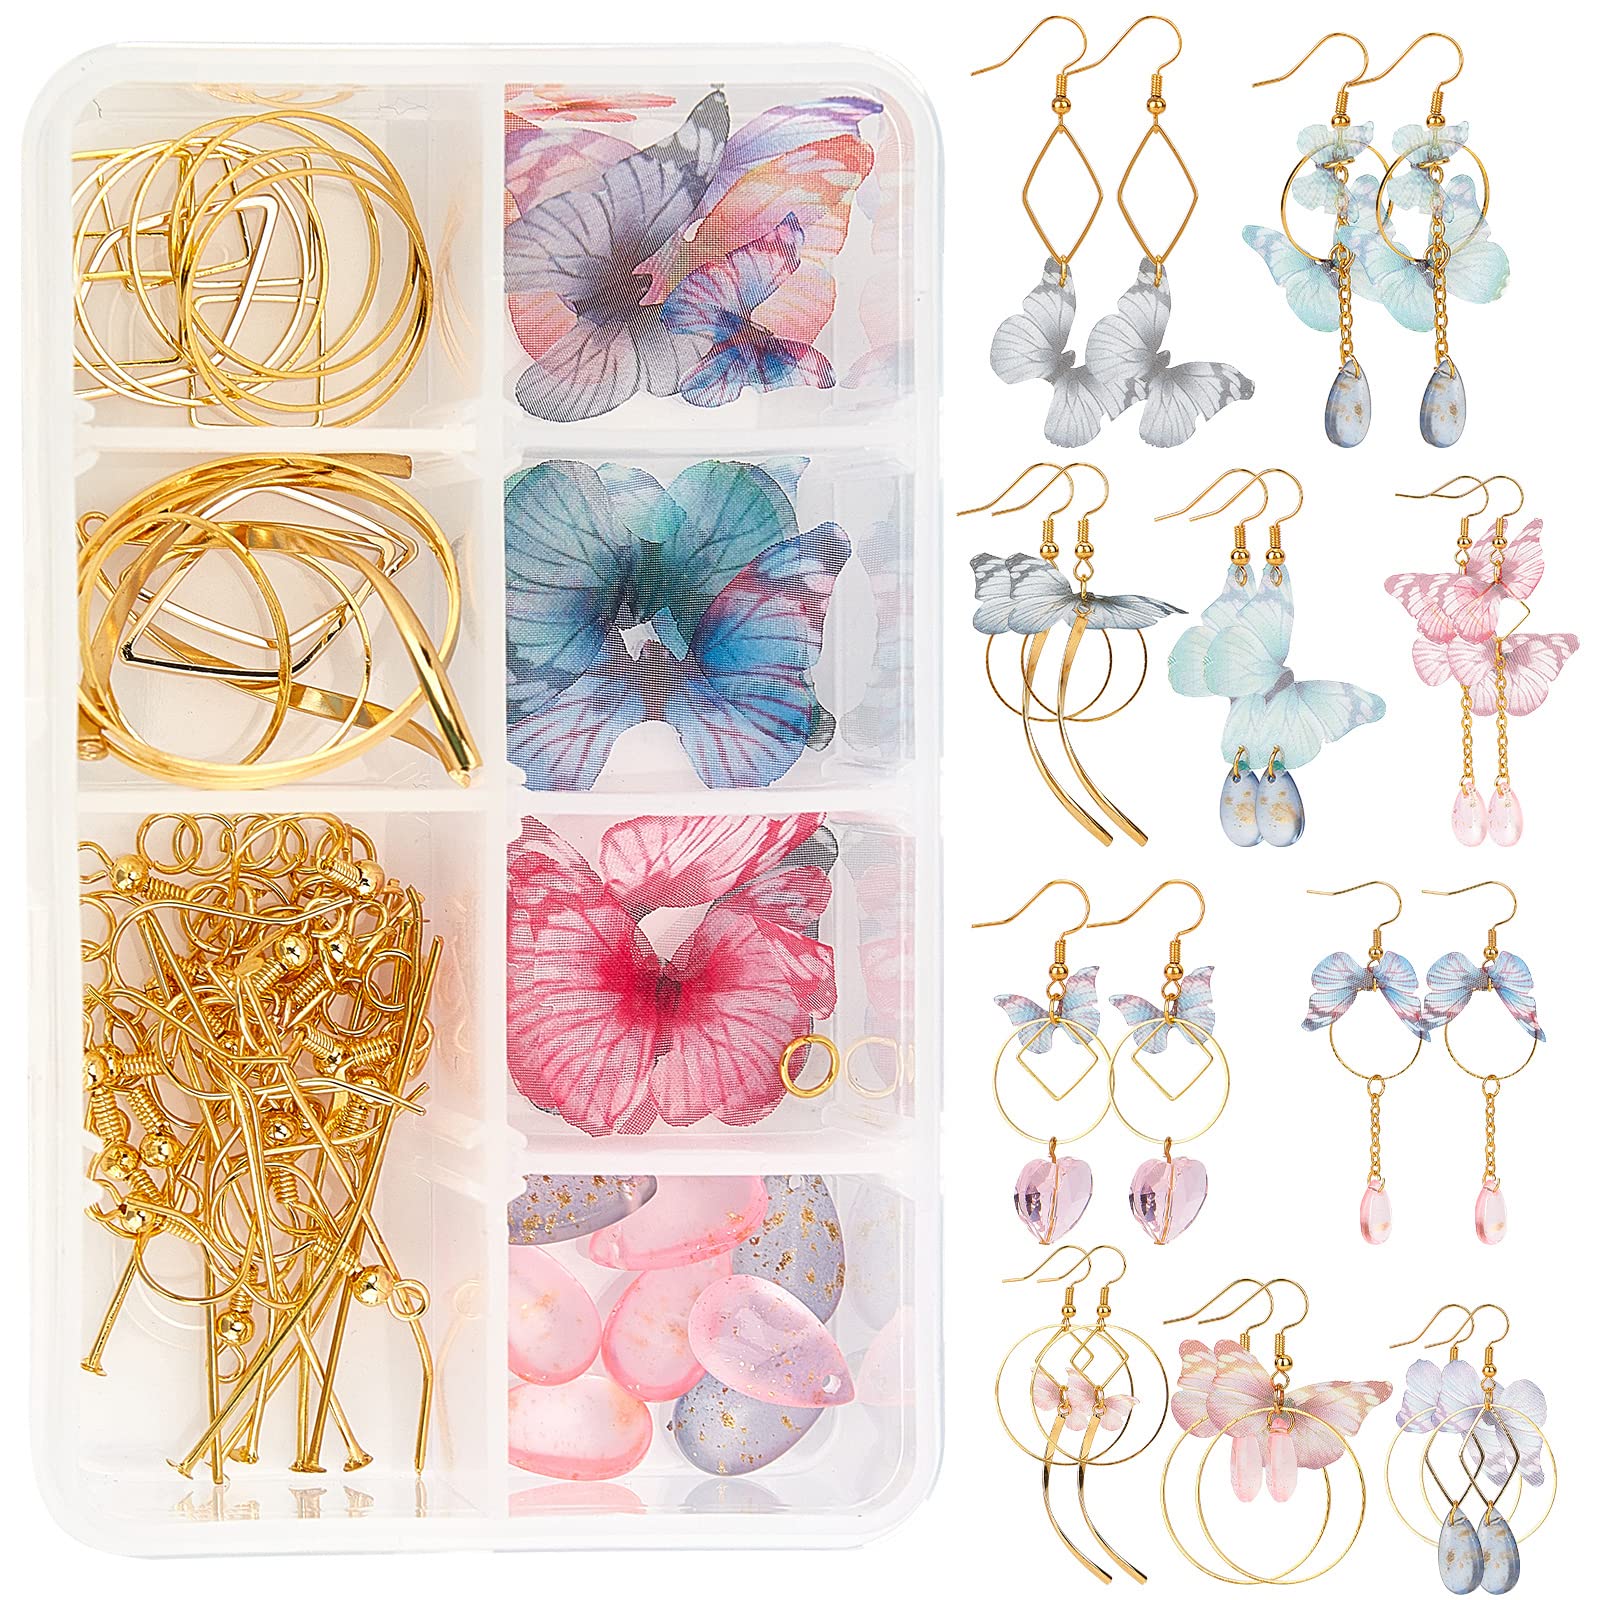 90Pcs/box Resin Earring Making Kit Butterfly Pendants For Women